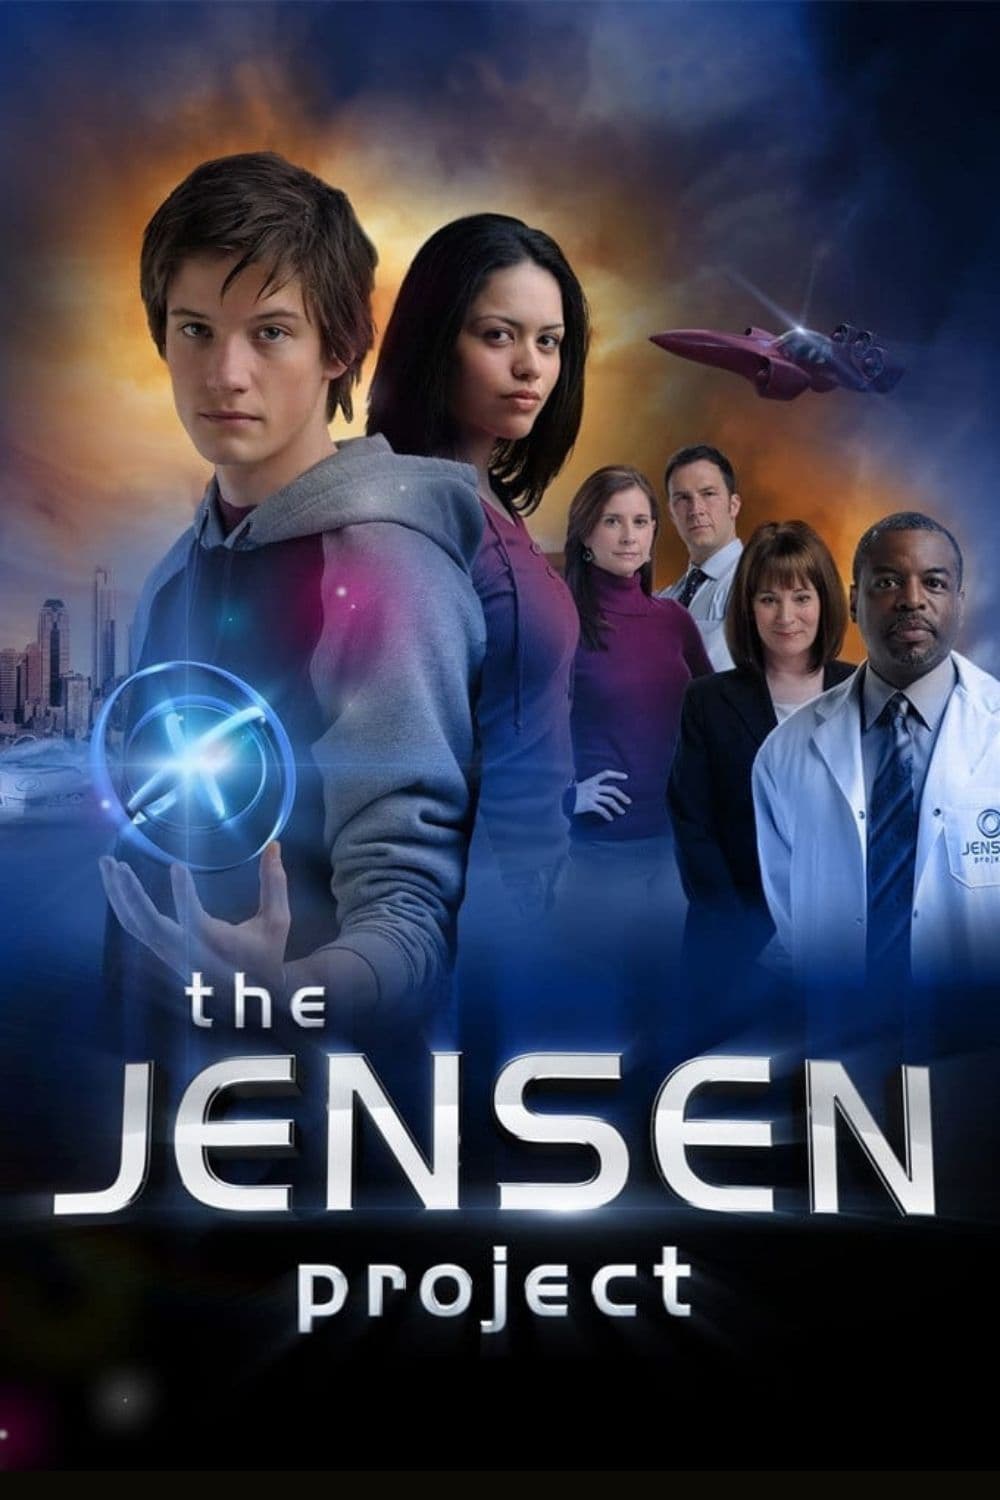 The Jensen Project film